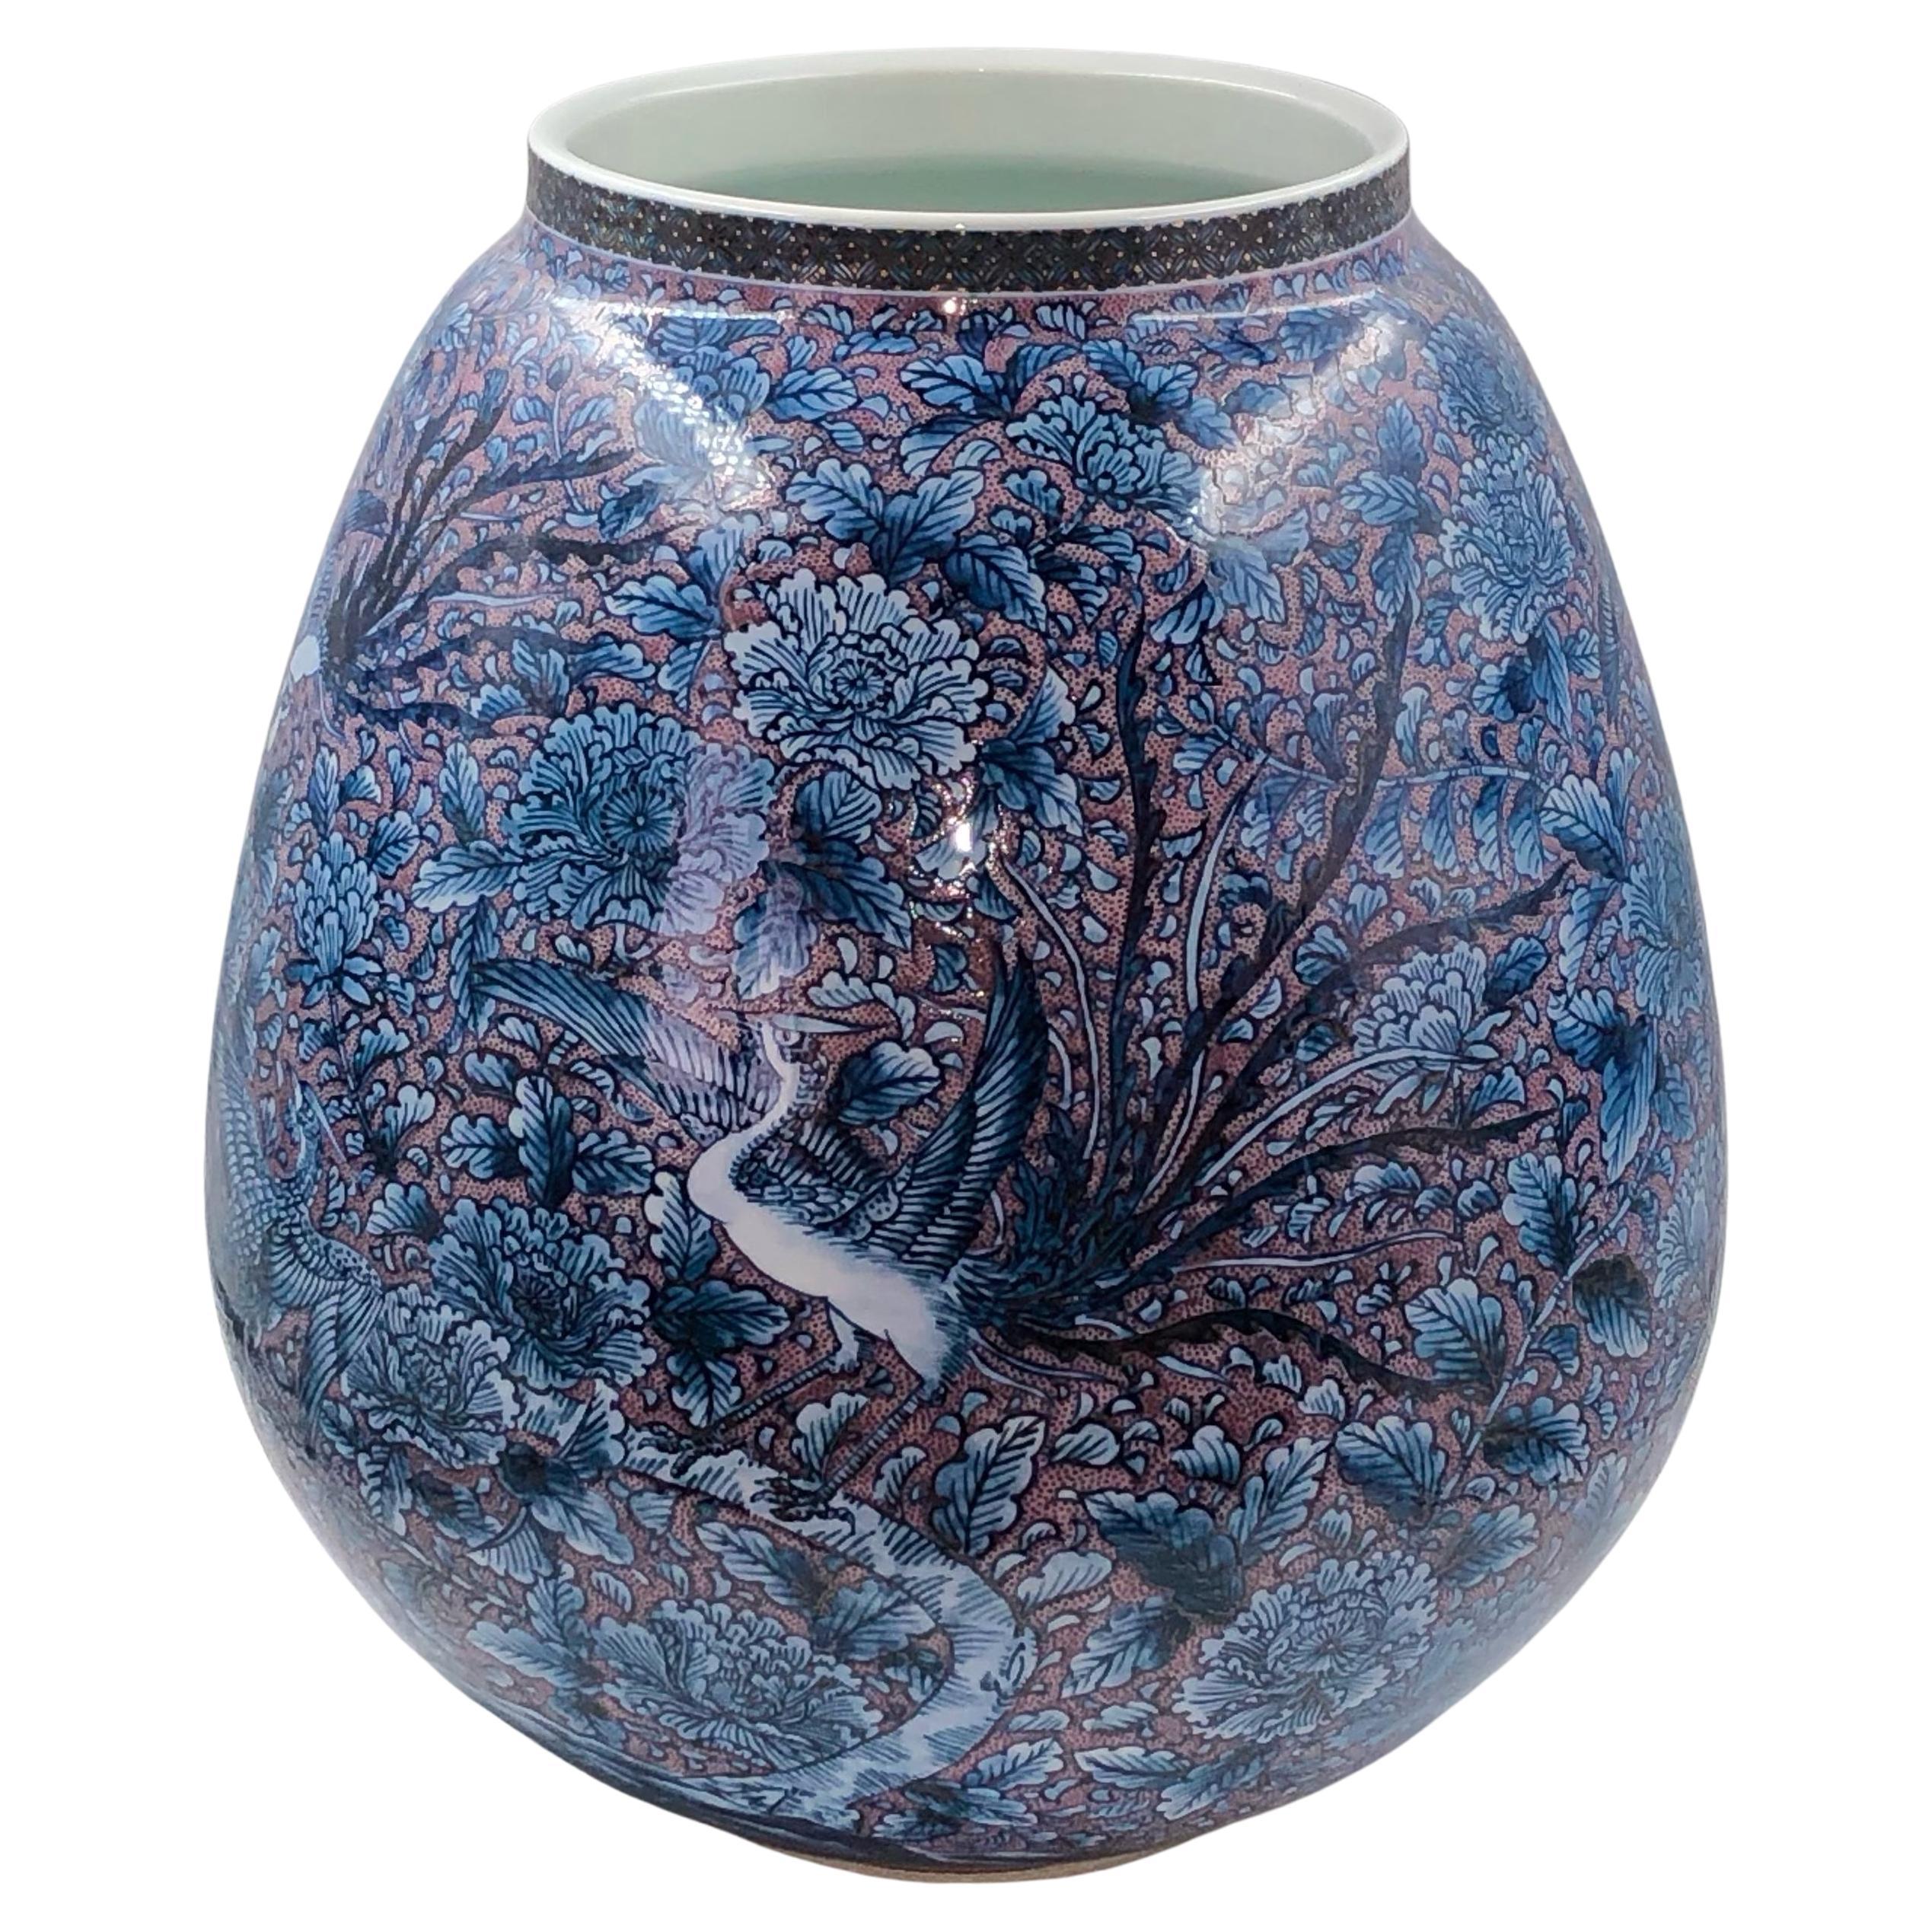 Japanese Contemporary Blue White Red Porcelain Vase by Master Artist, 2